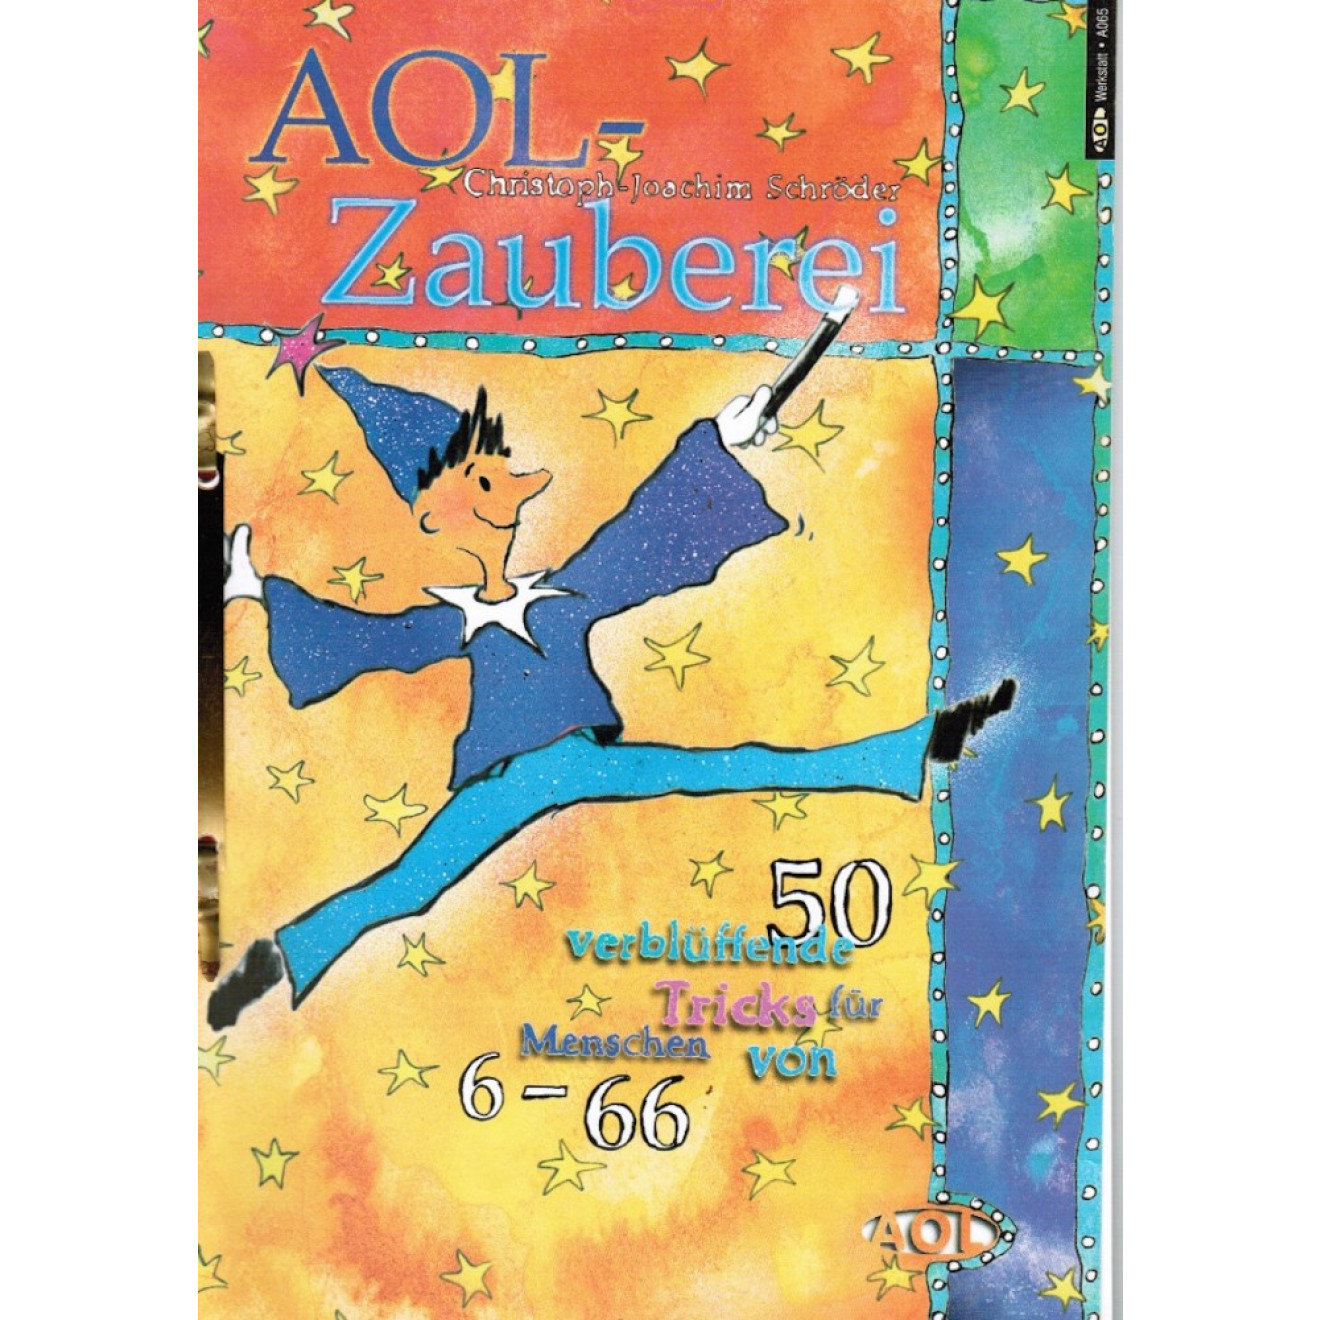 AOL - Zauberei